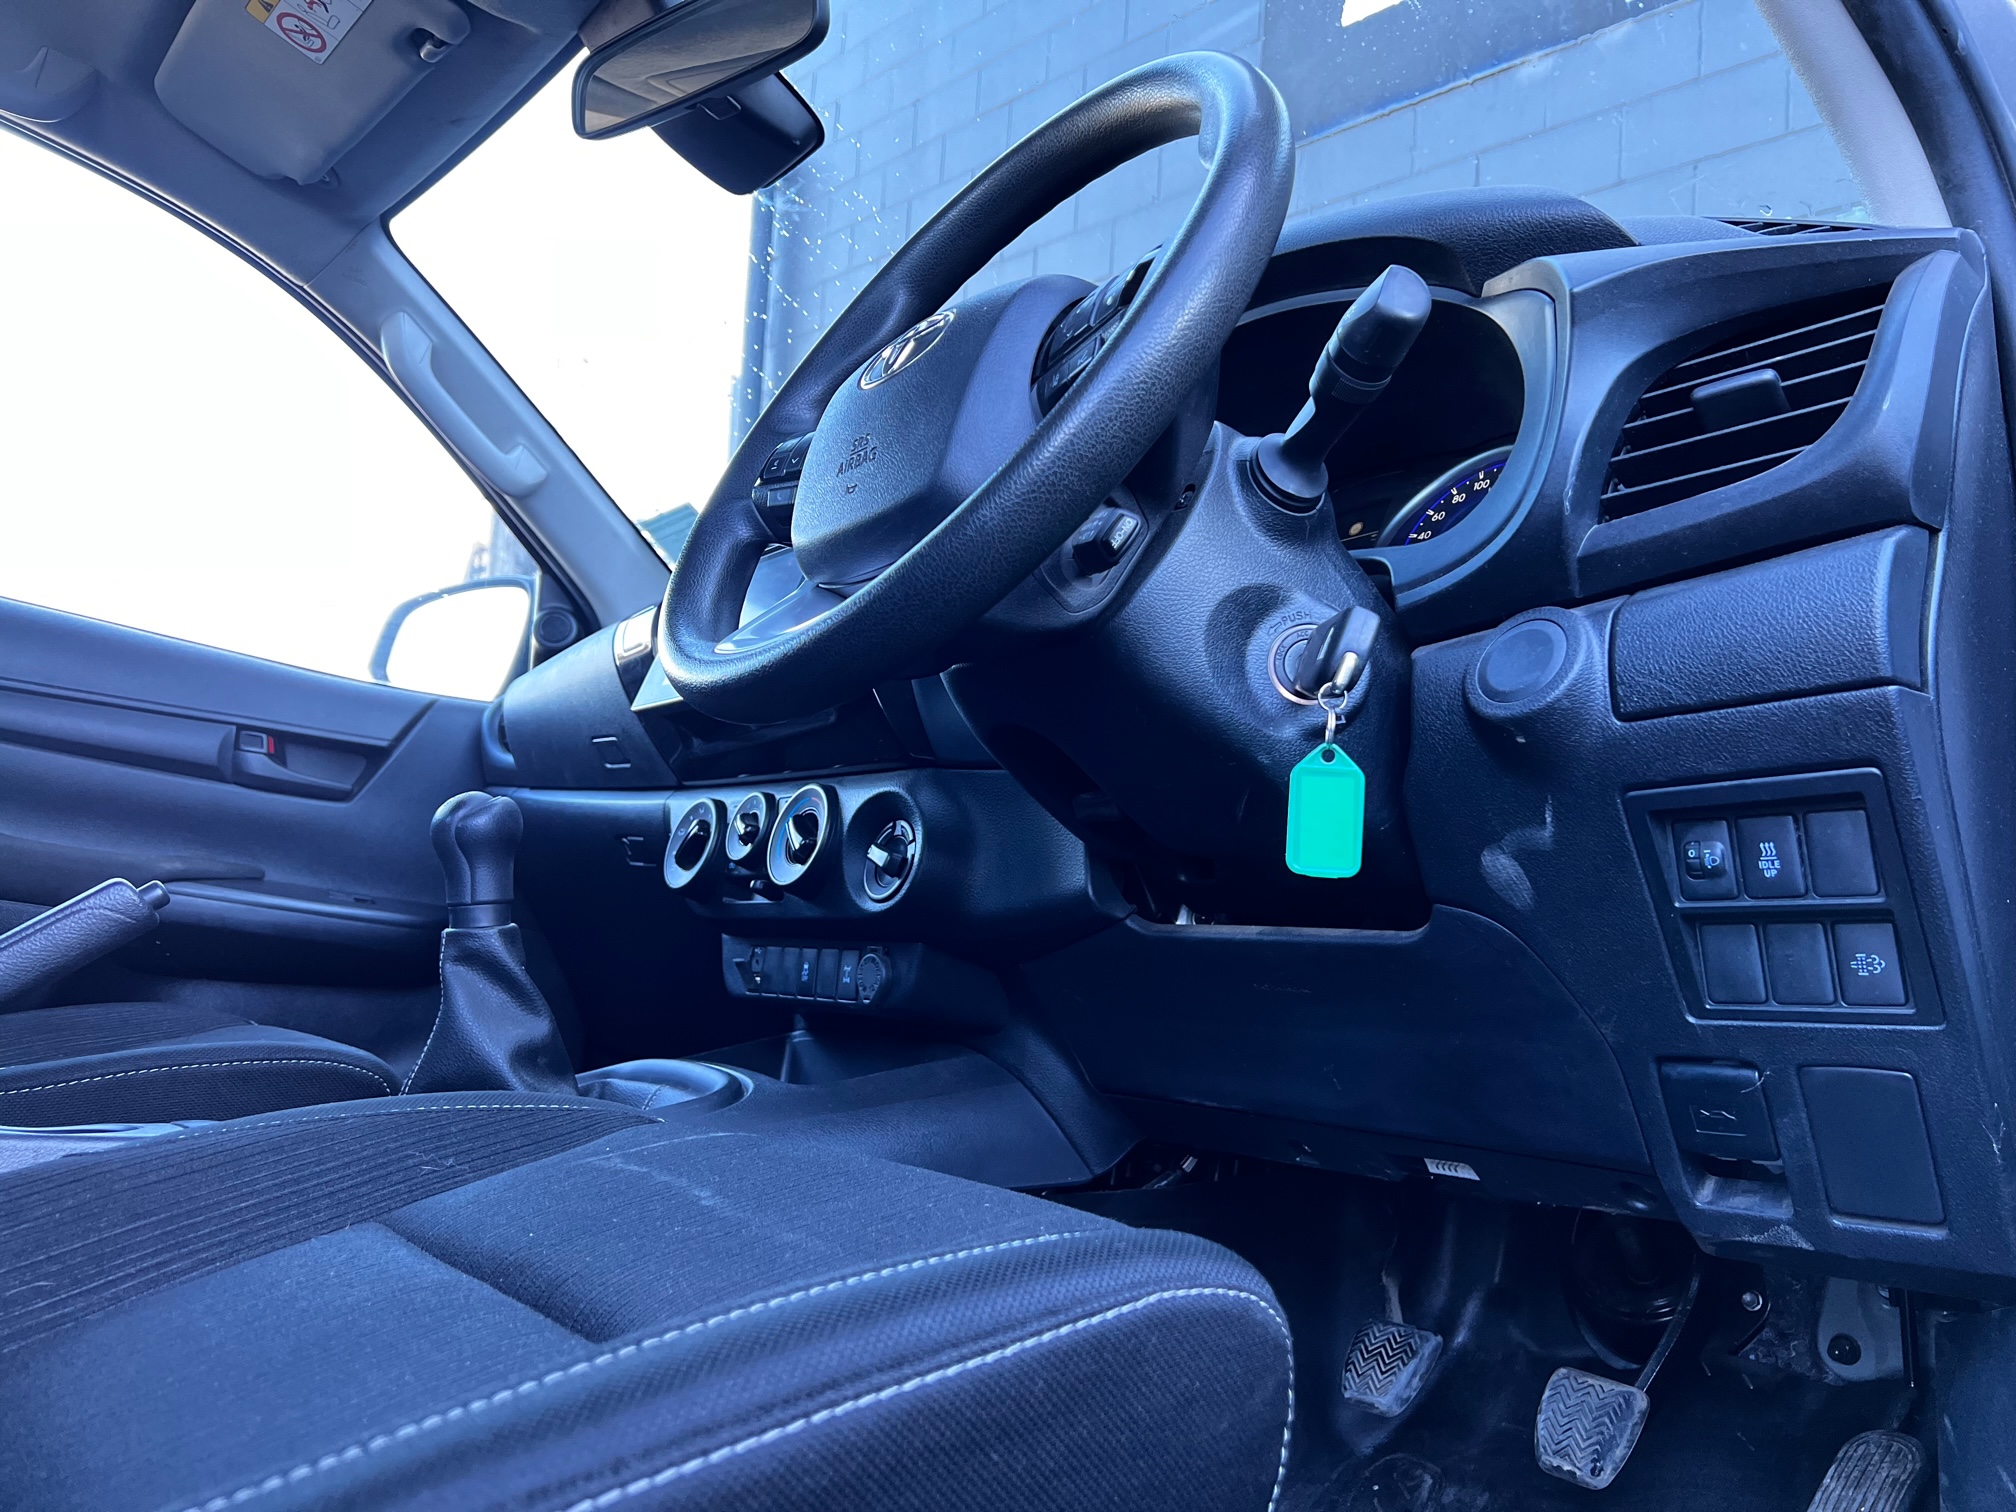 Toyota Hilux SR5 2019 Image 11